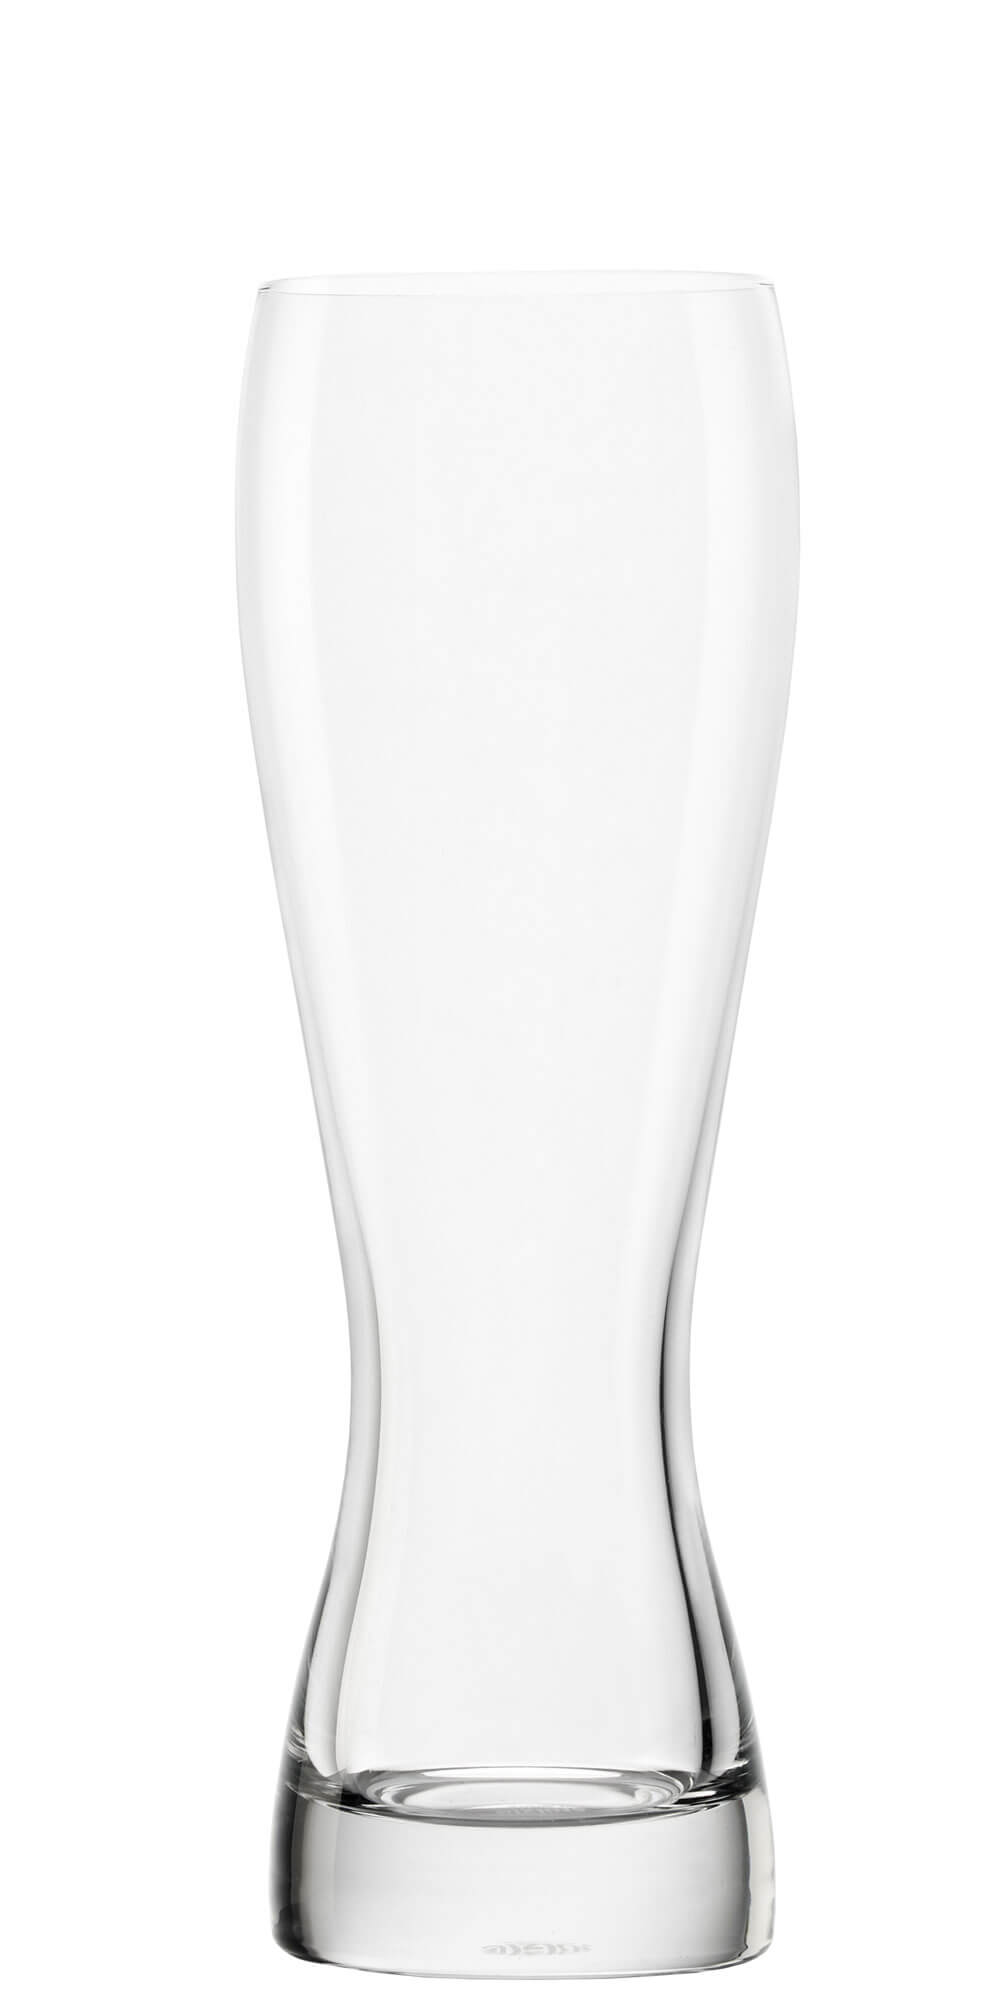 Wheat beer glass, Stölzle - 395ml